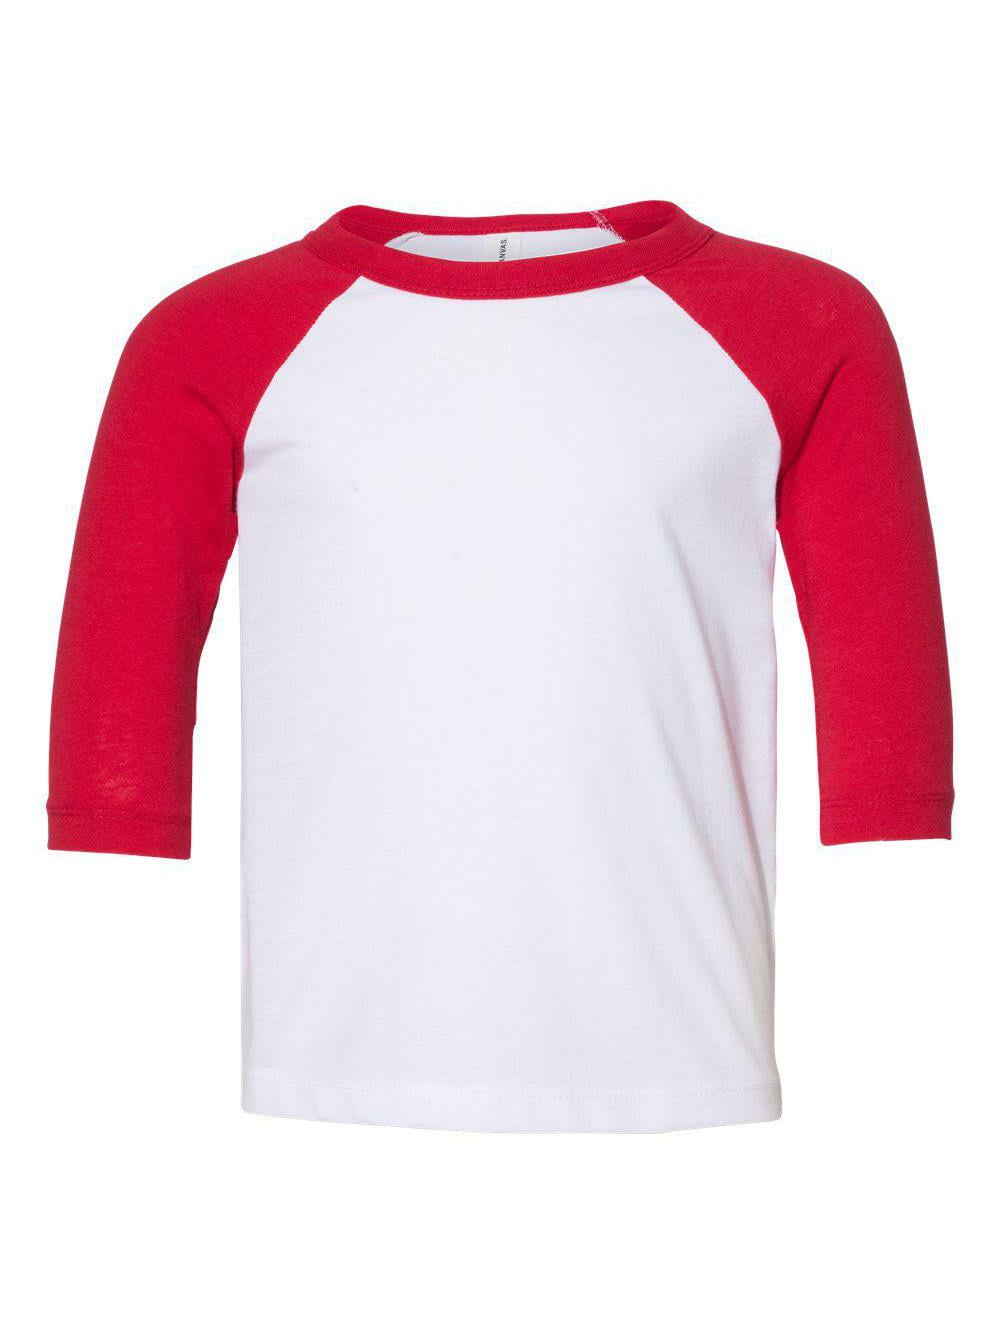 red and white baseball shirt